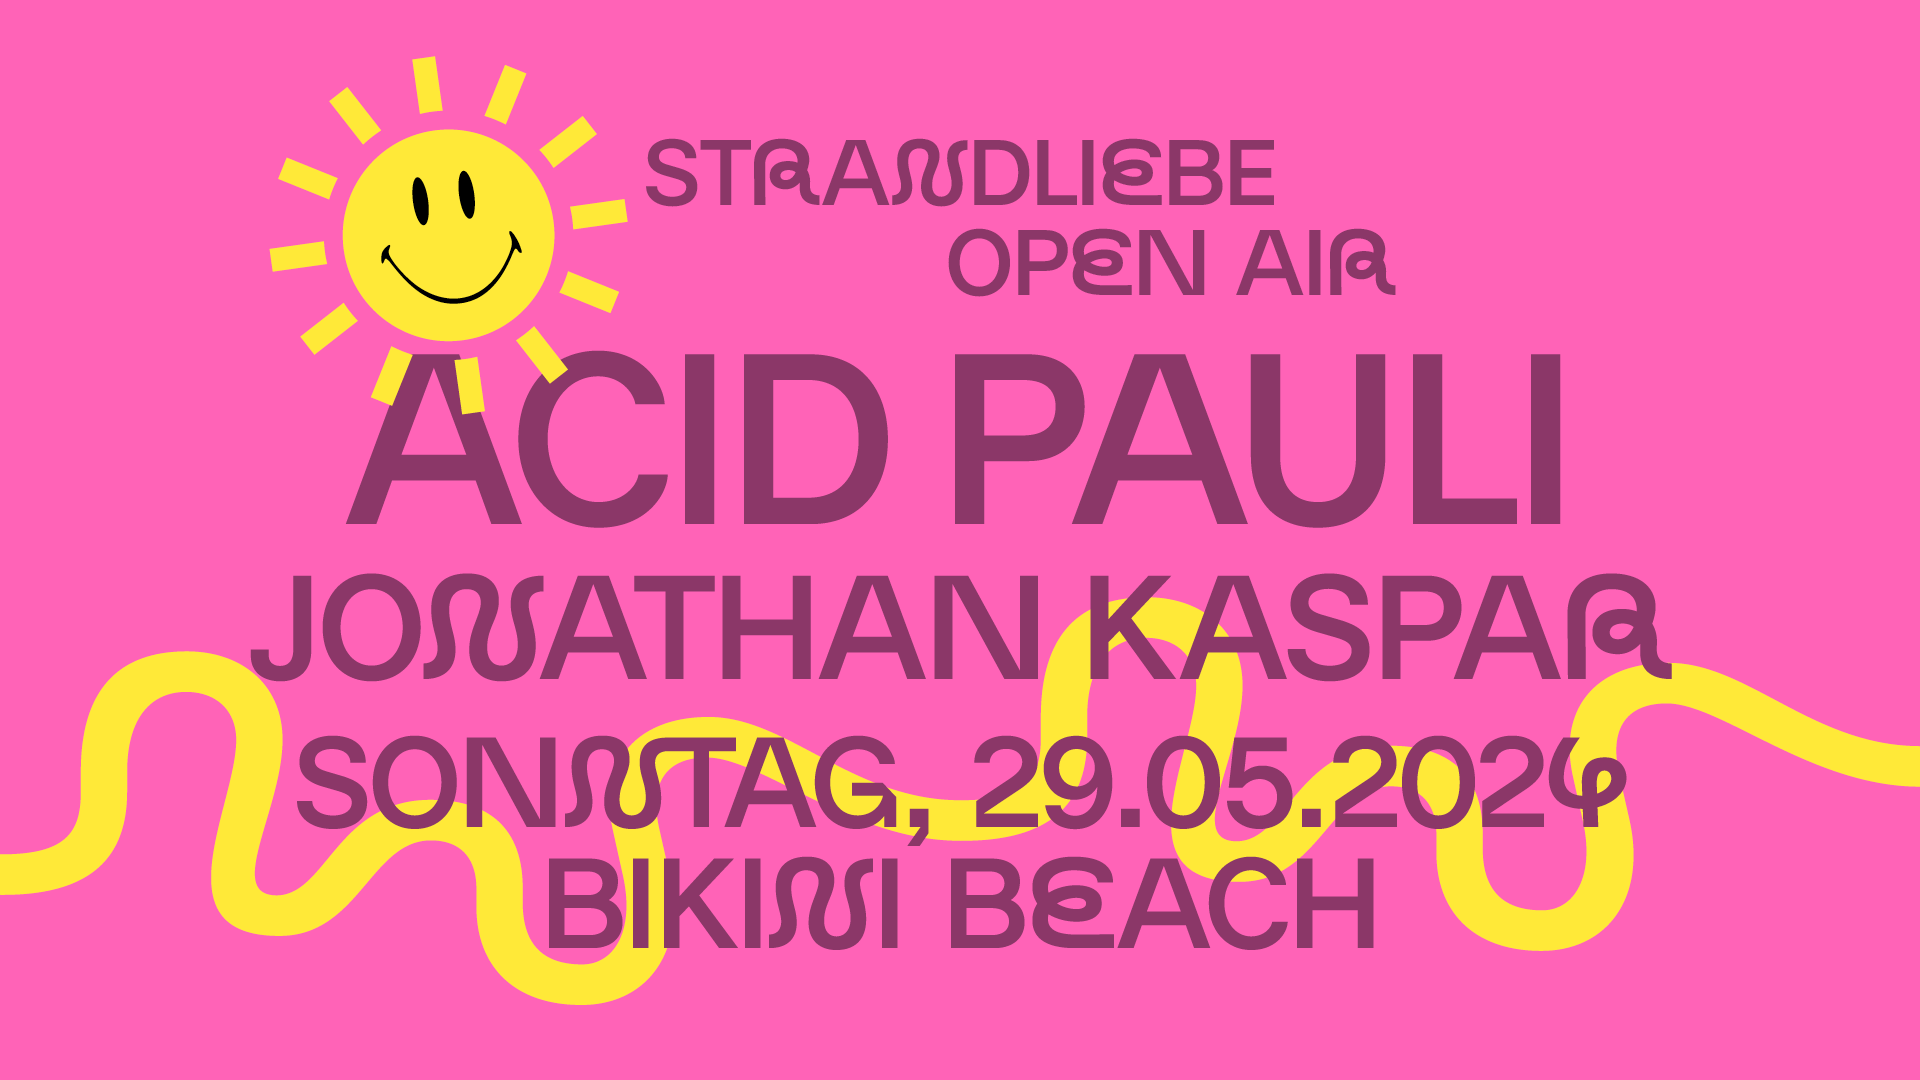 Acid Pauli & Jonathan Kaspar - strandliebe Open Air I Bikini Beach Bonn - フライヤー表